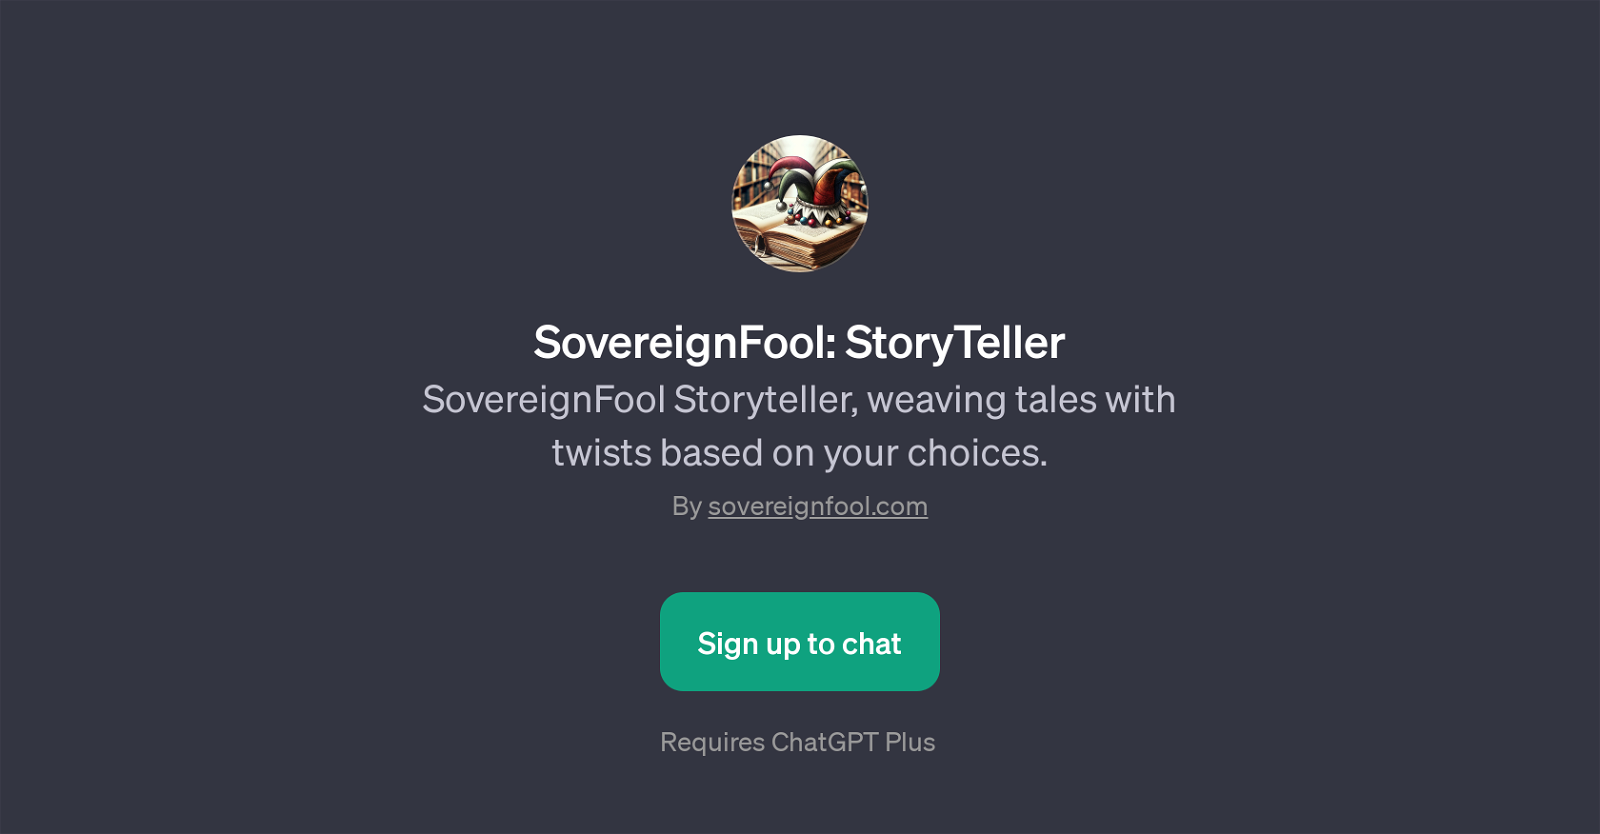 SovereignFool: StoryTeller website